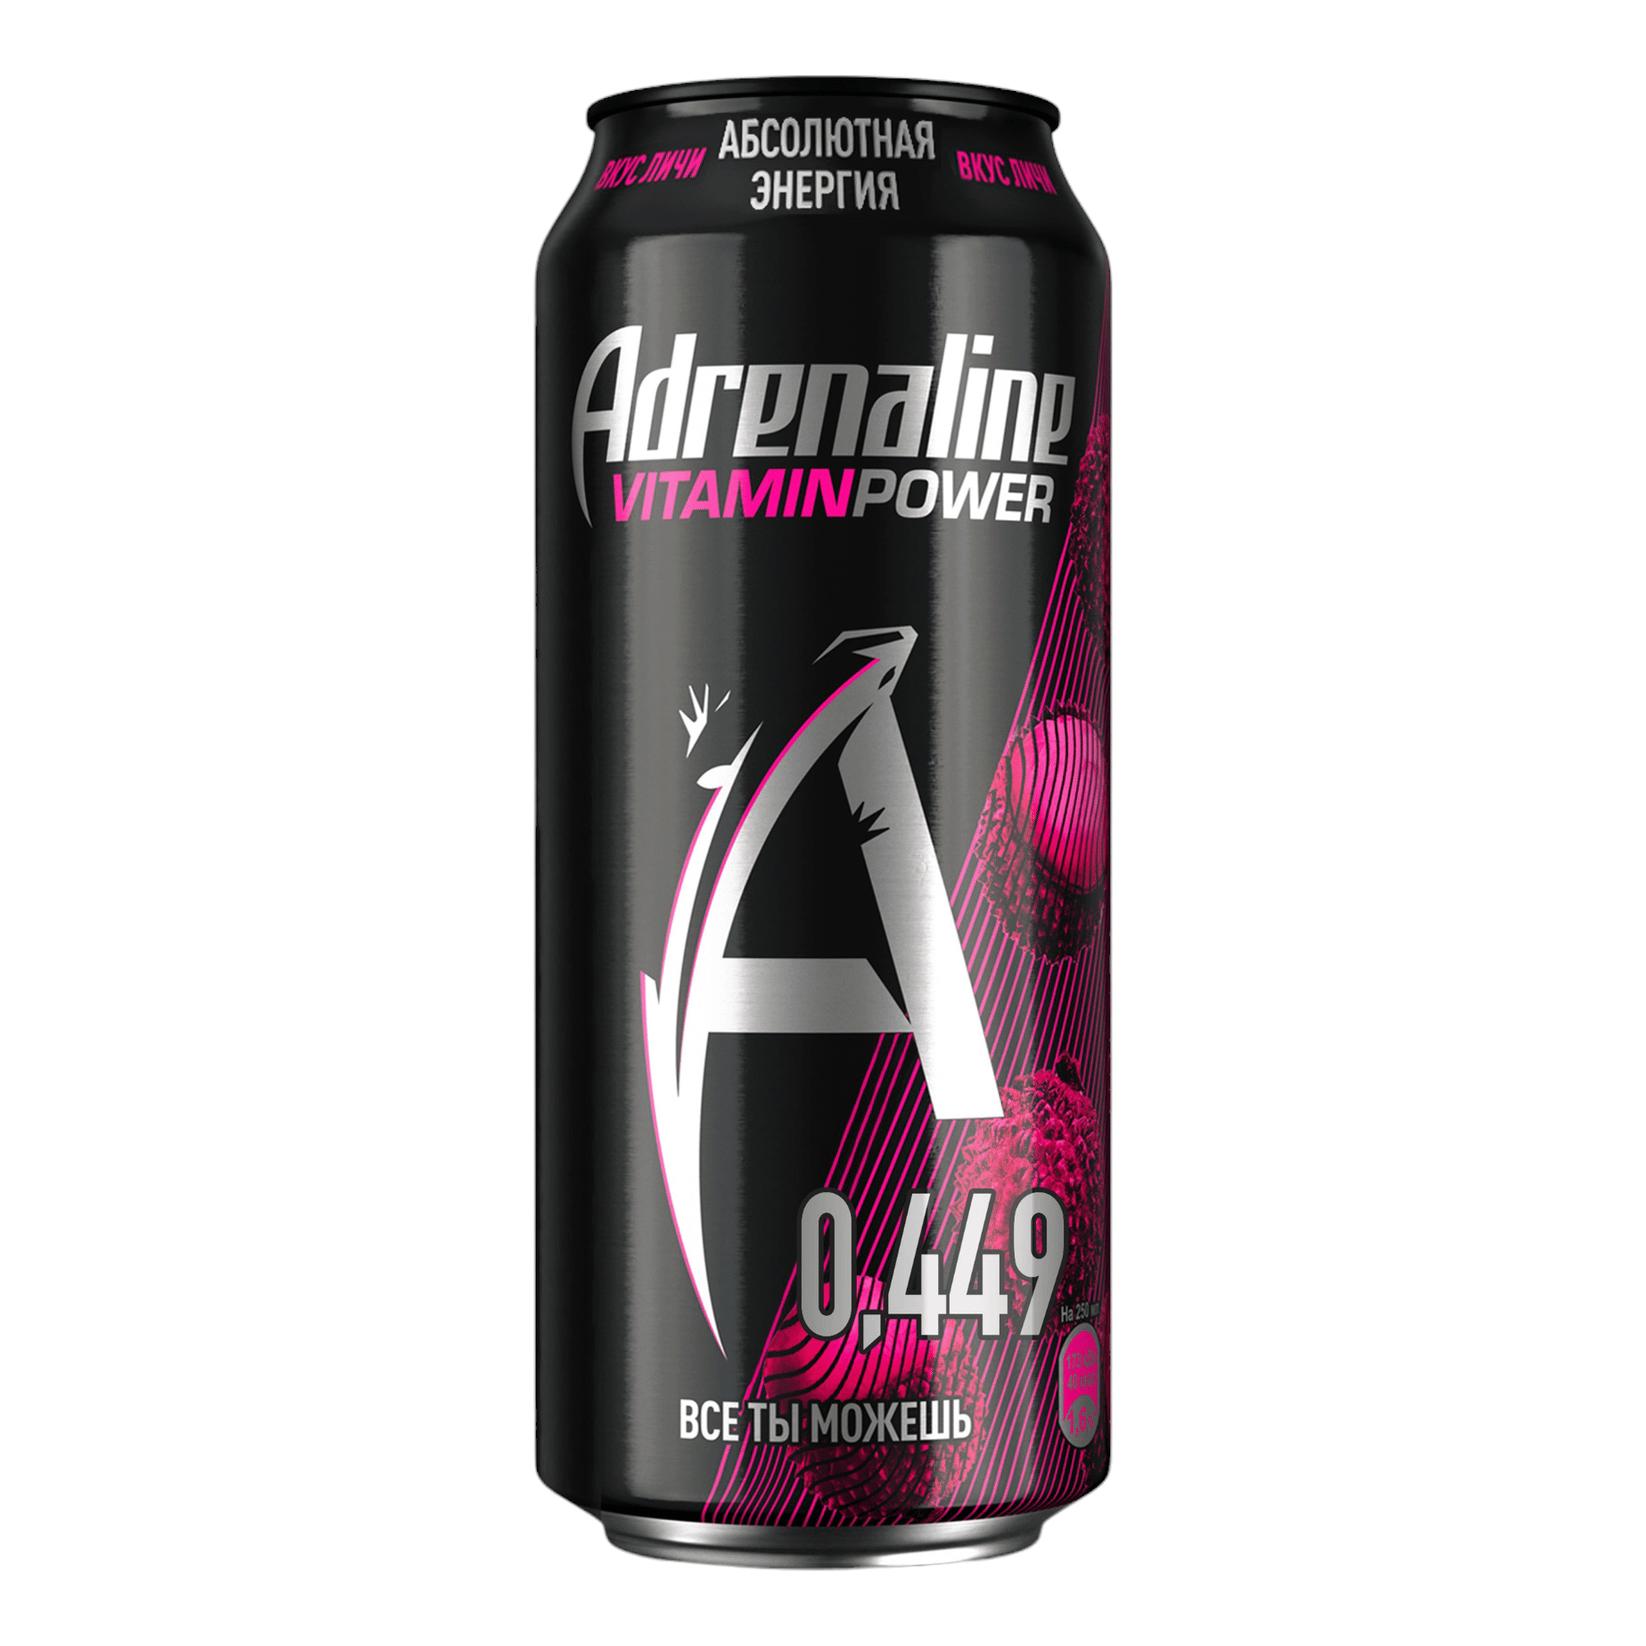 Напиток энергетический Adrenaline Rush Vitamin Power со вкусом Личи 449 мл., ж/б